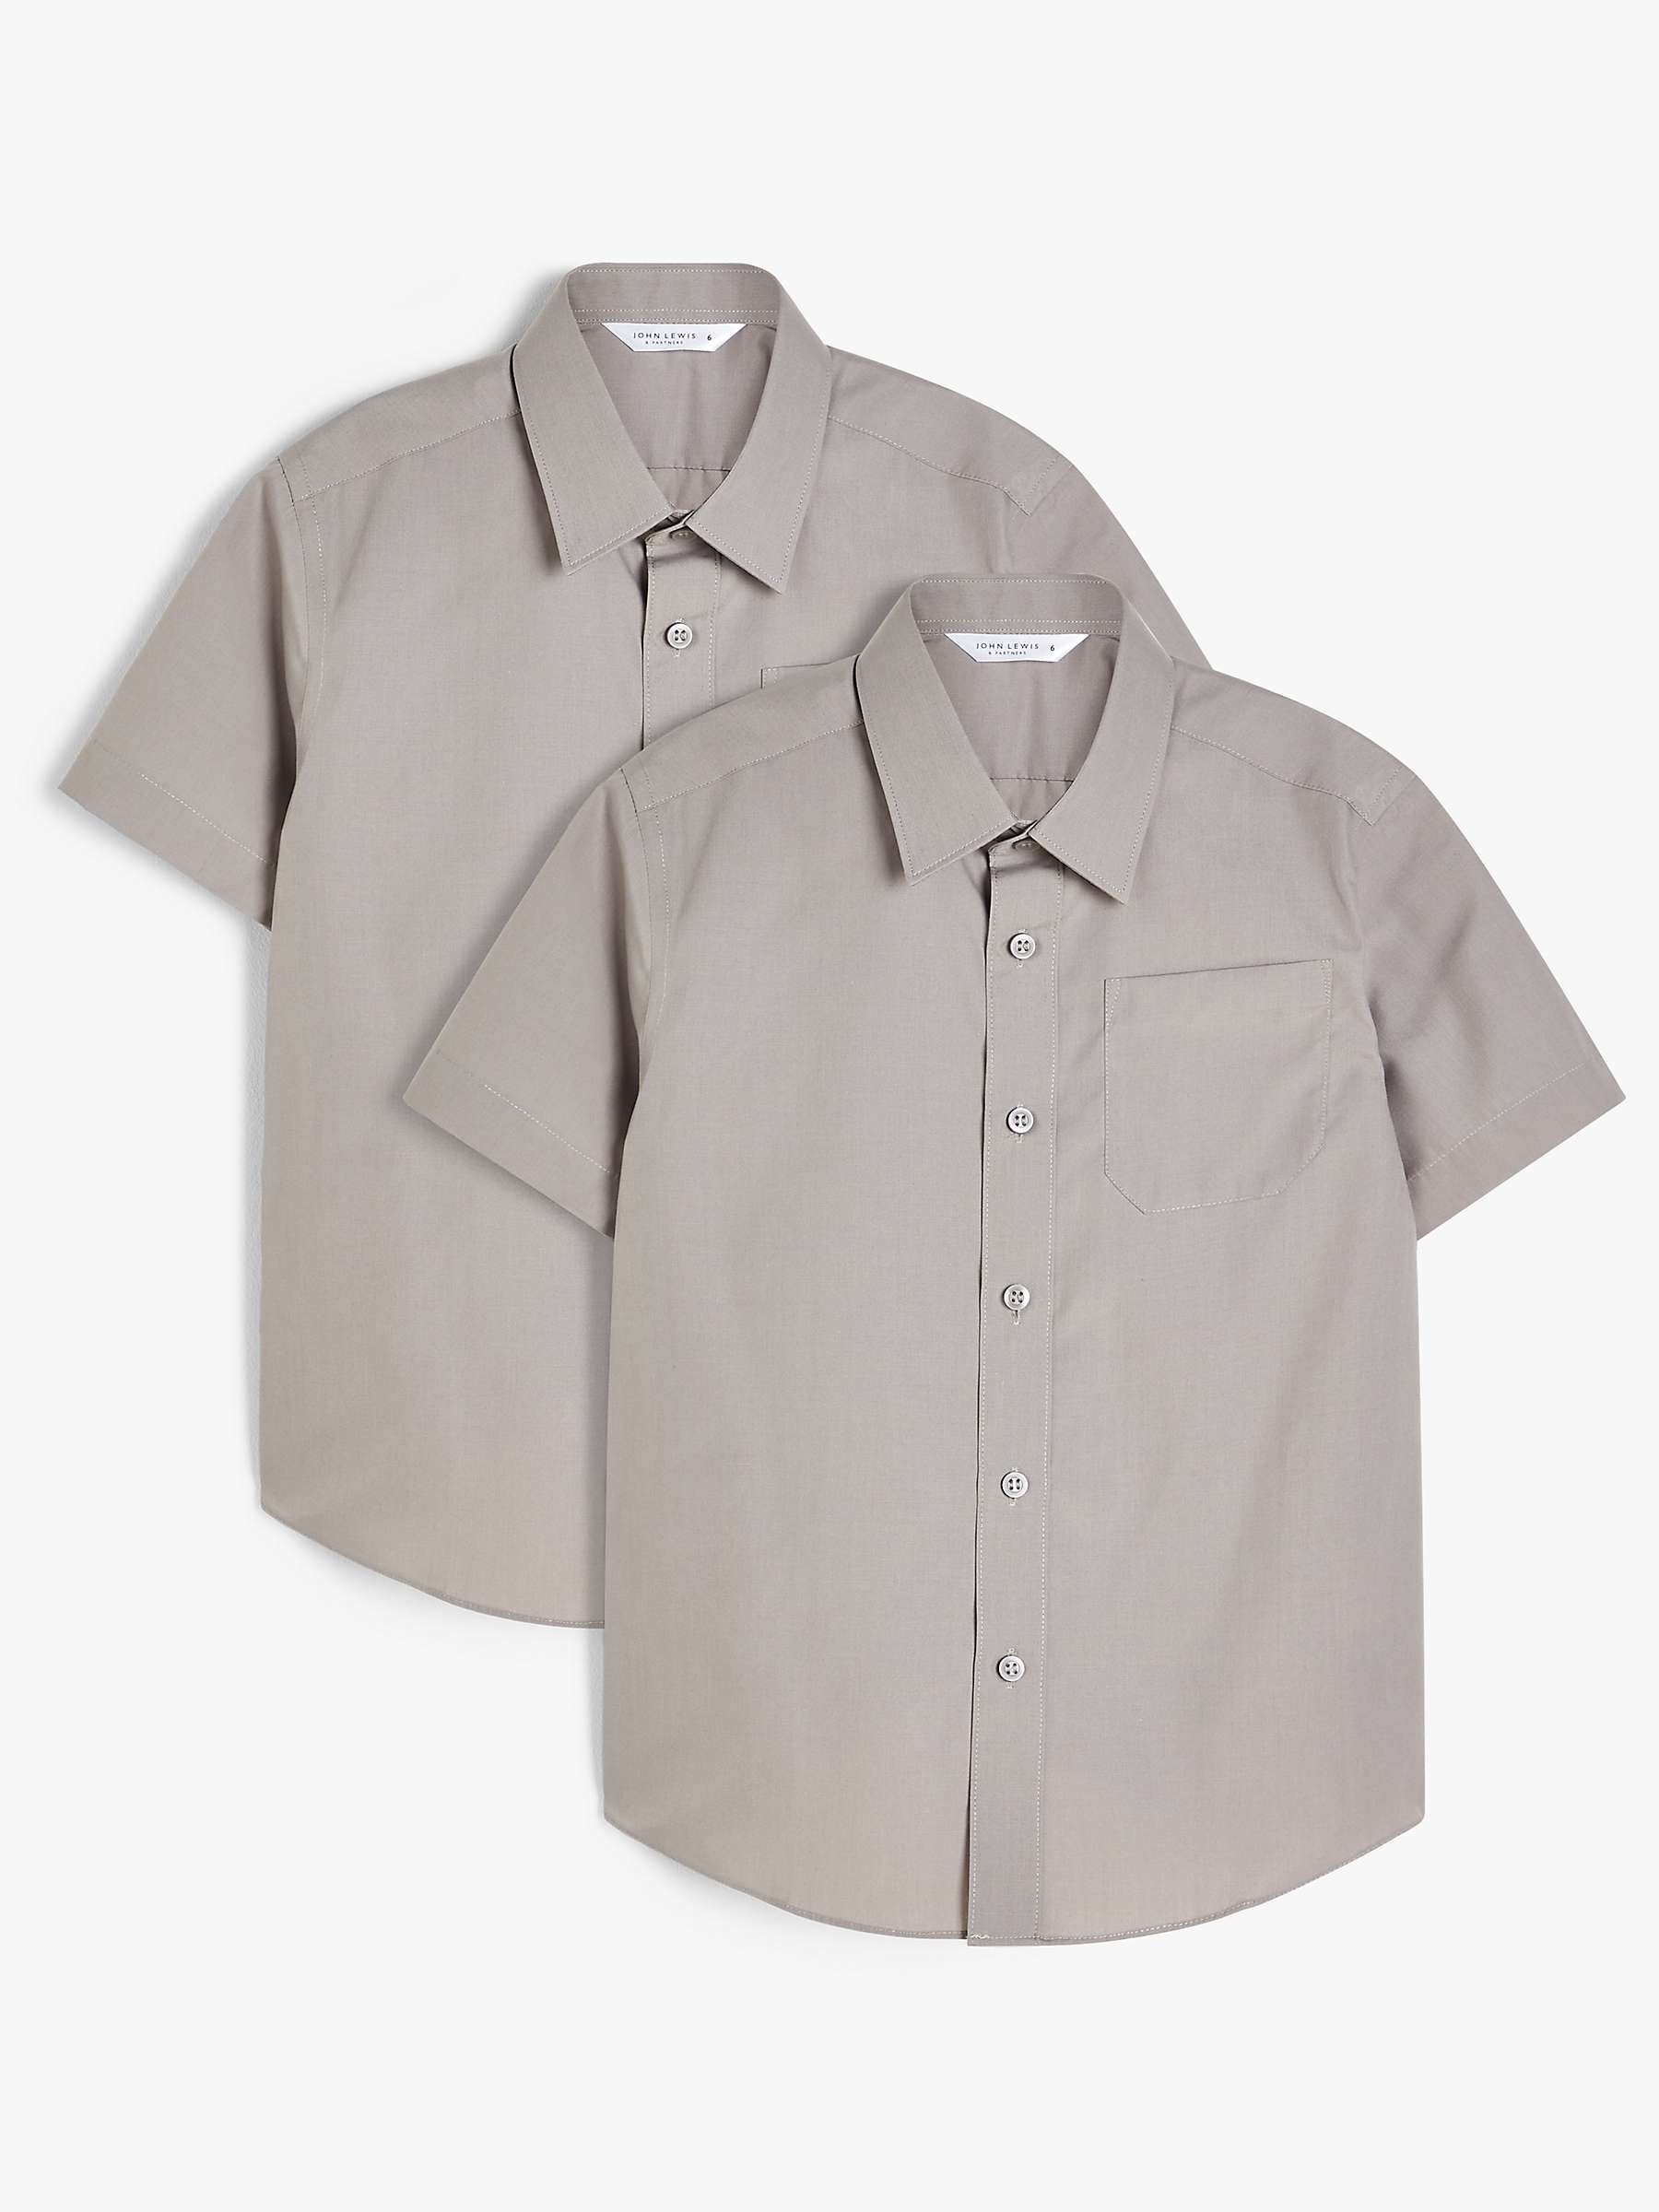 Buy John Lewis Boys' Short Sleeved Stain Resistant Easy Care Shirt, Pack of 2 Online at johnlewis.com